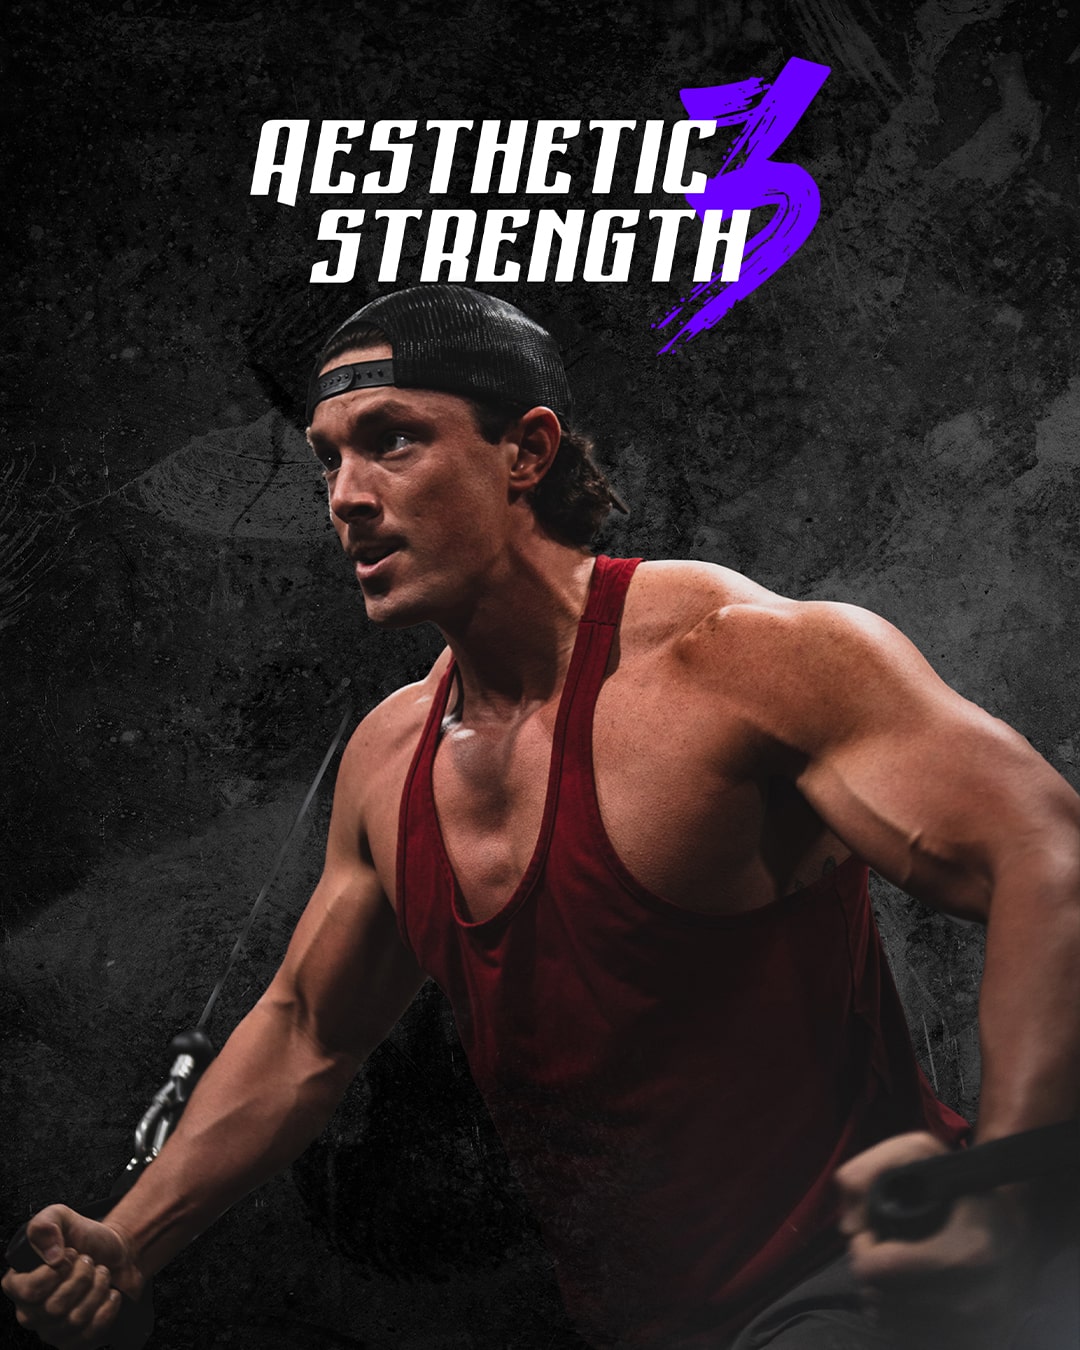 Aesthetic Strength 3